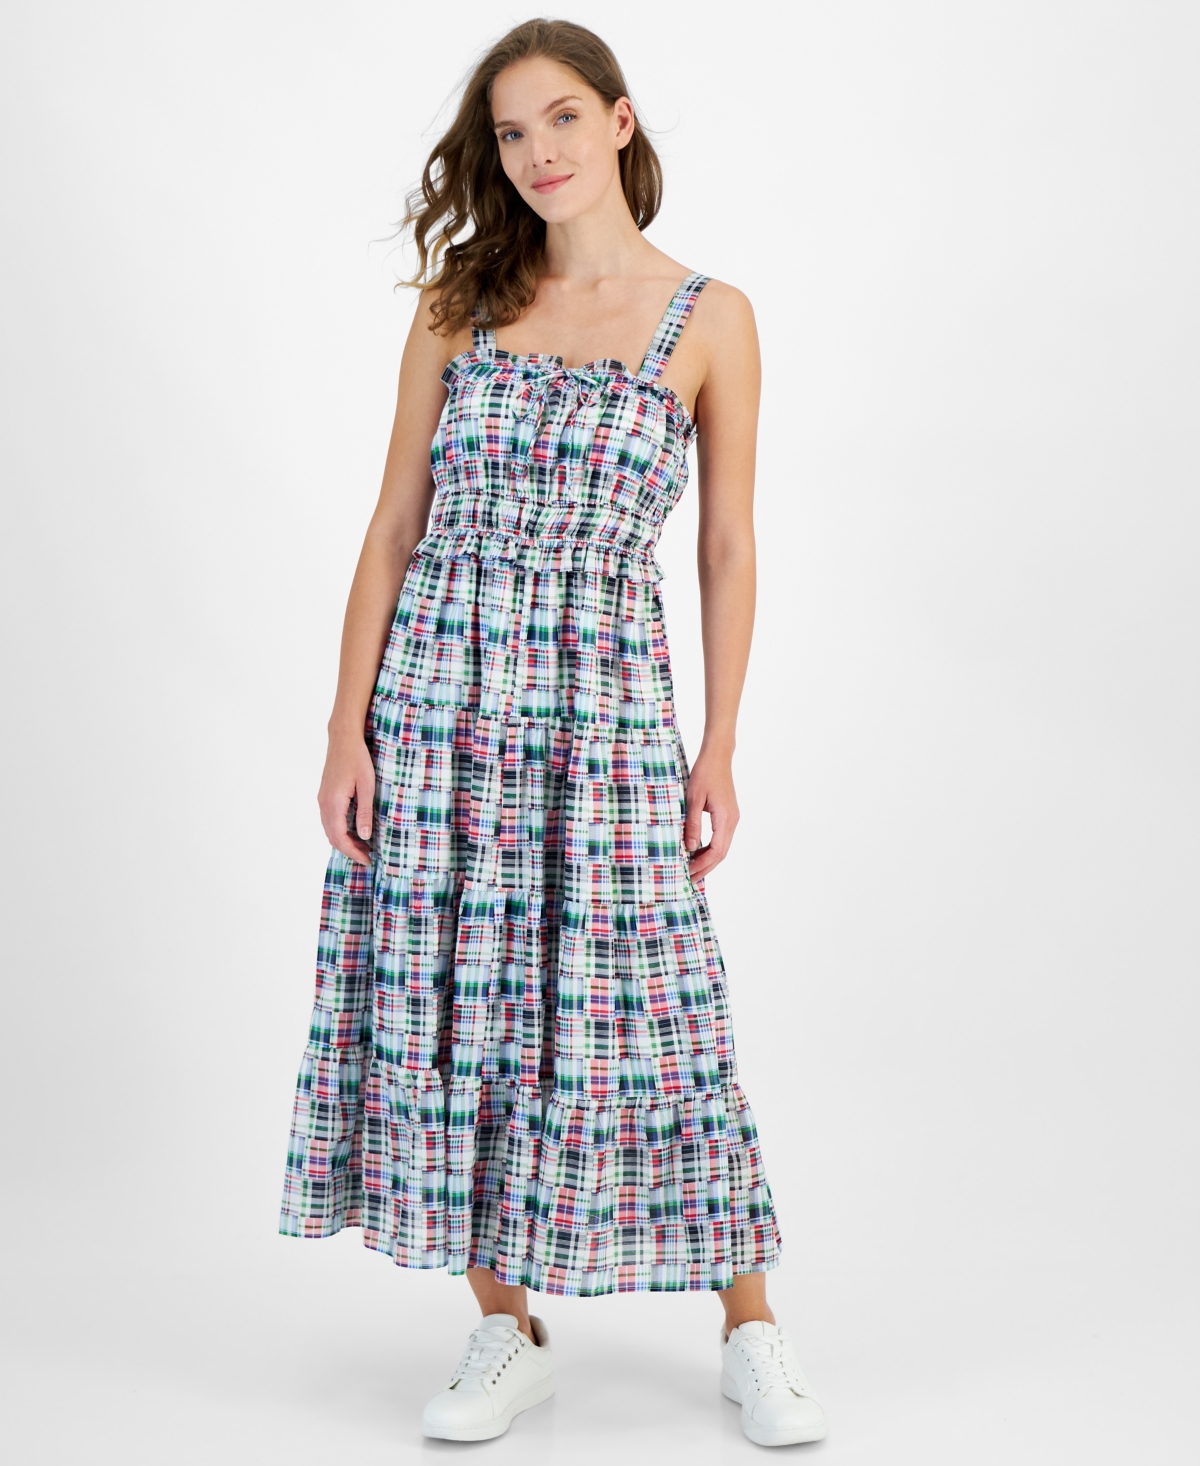 Women's Plaid-Print Ruffle-Trim Maxi Dress - Nigh Sky M